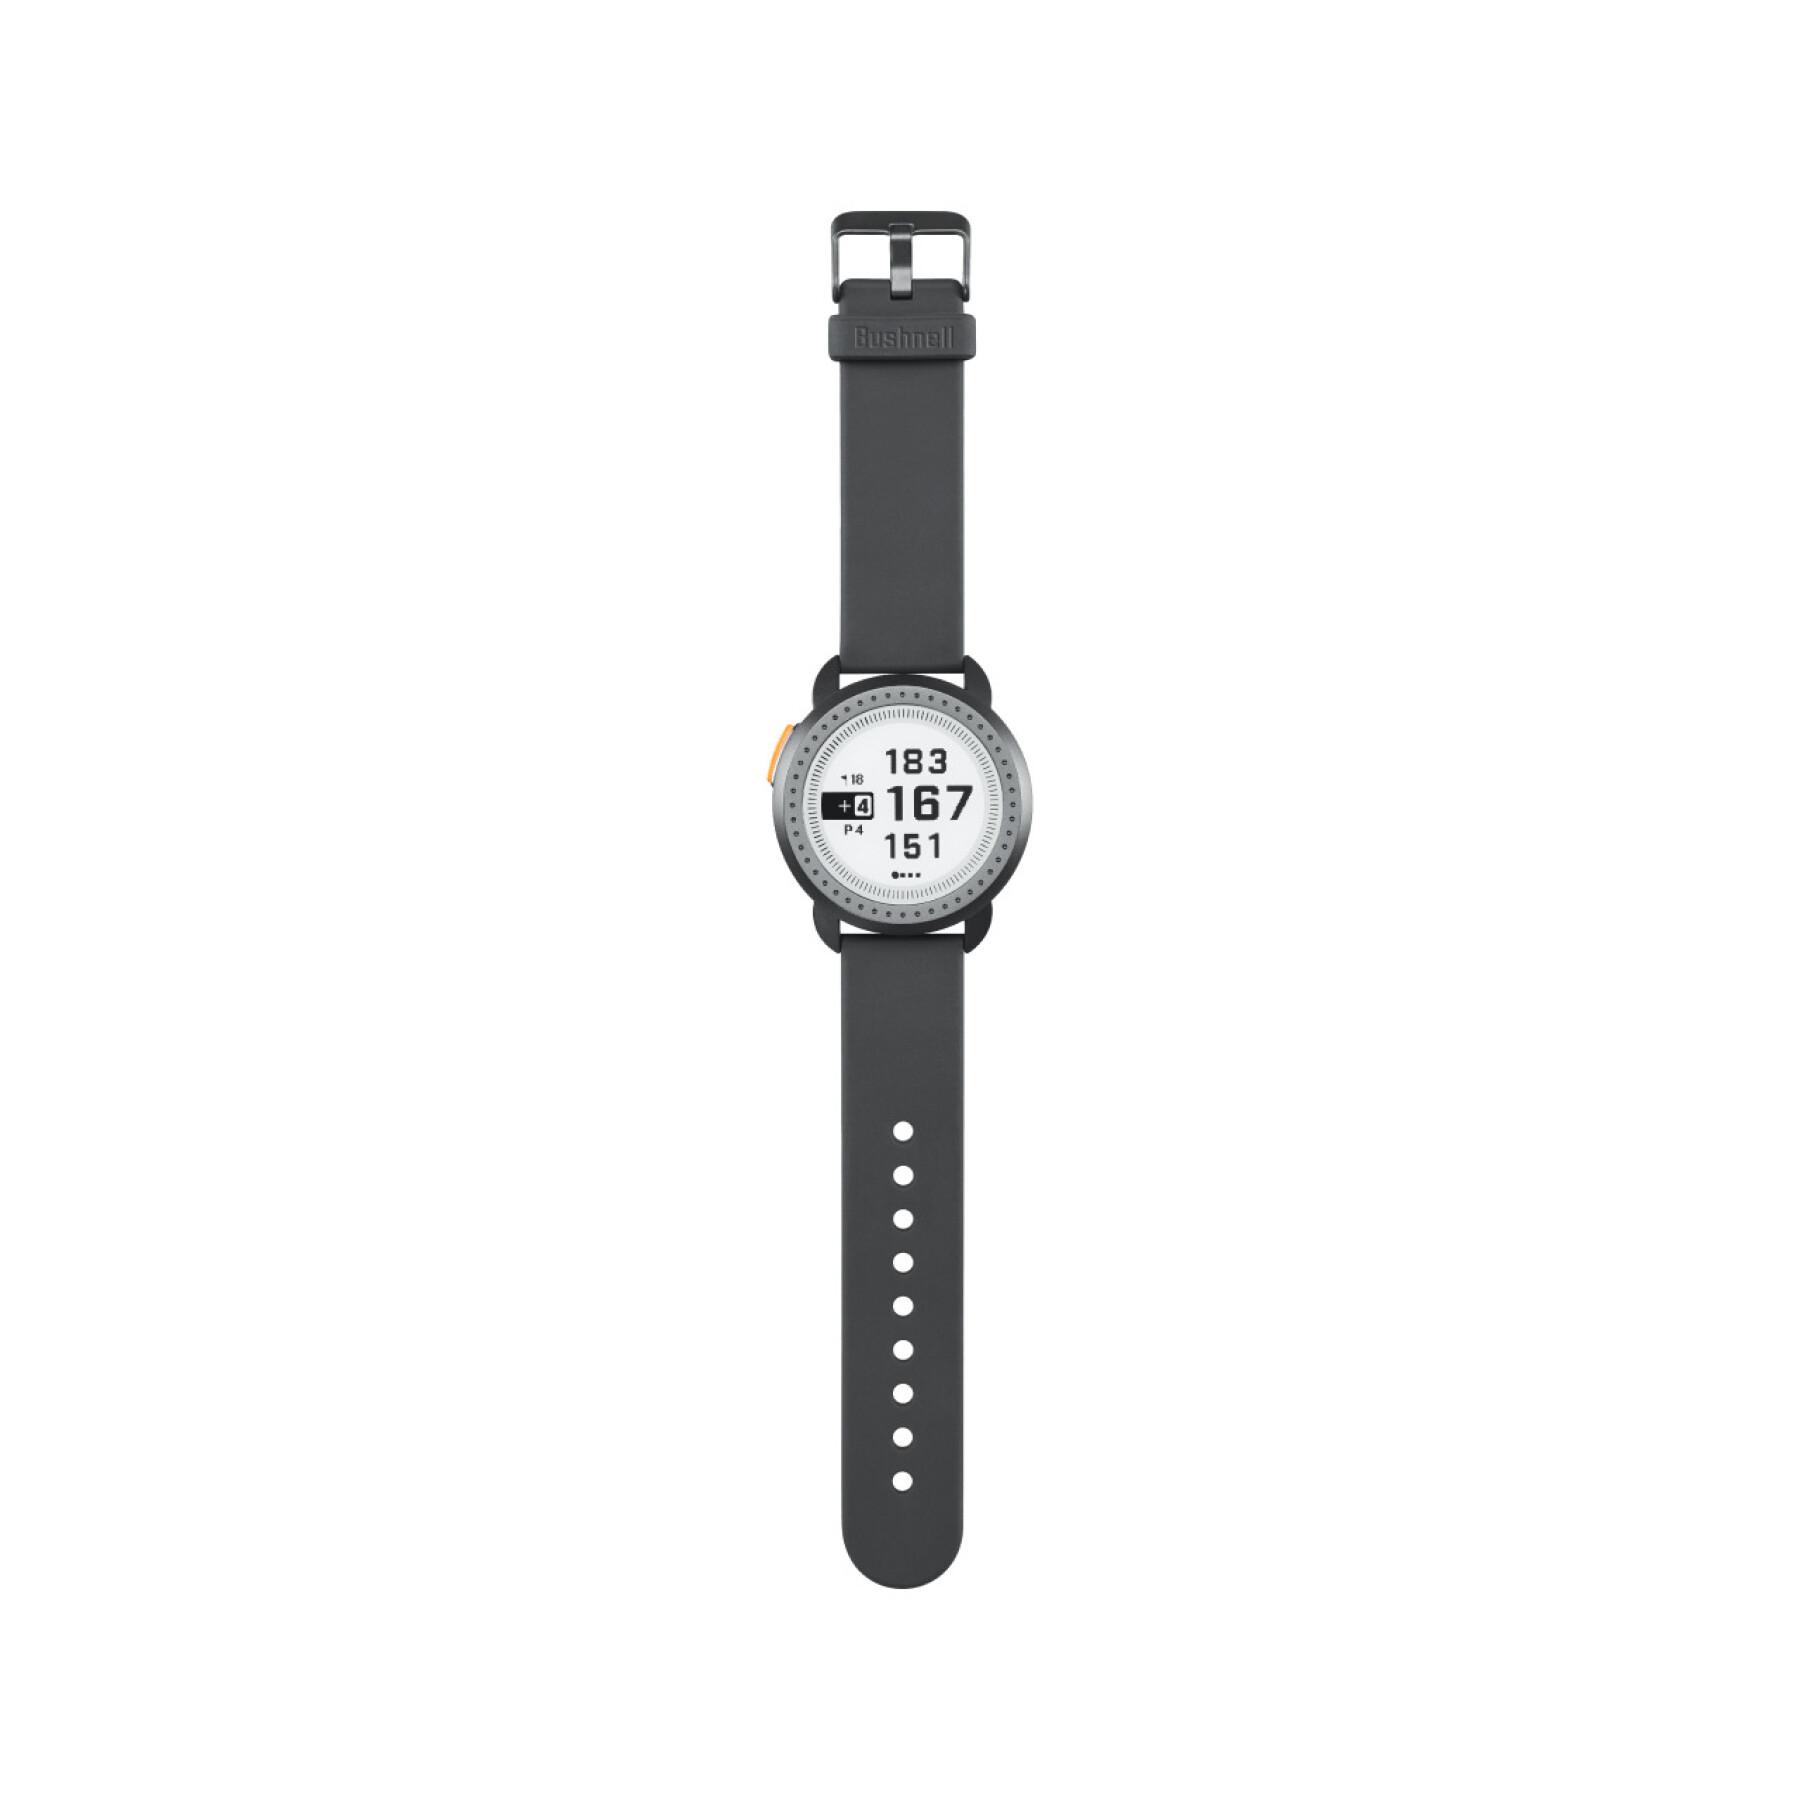 Bushnell golf ion edge zegarek gps